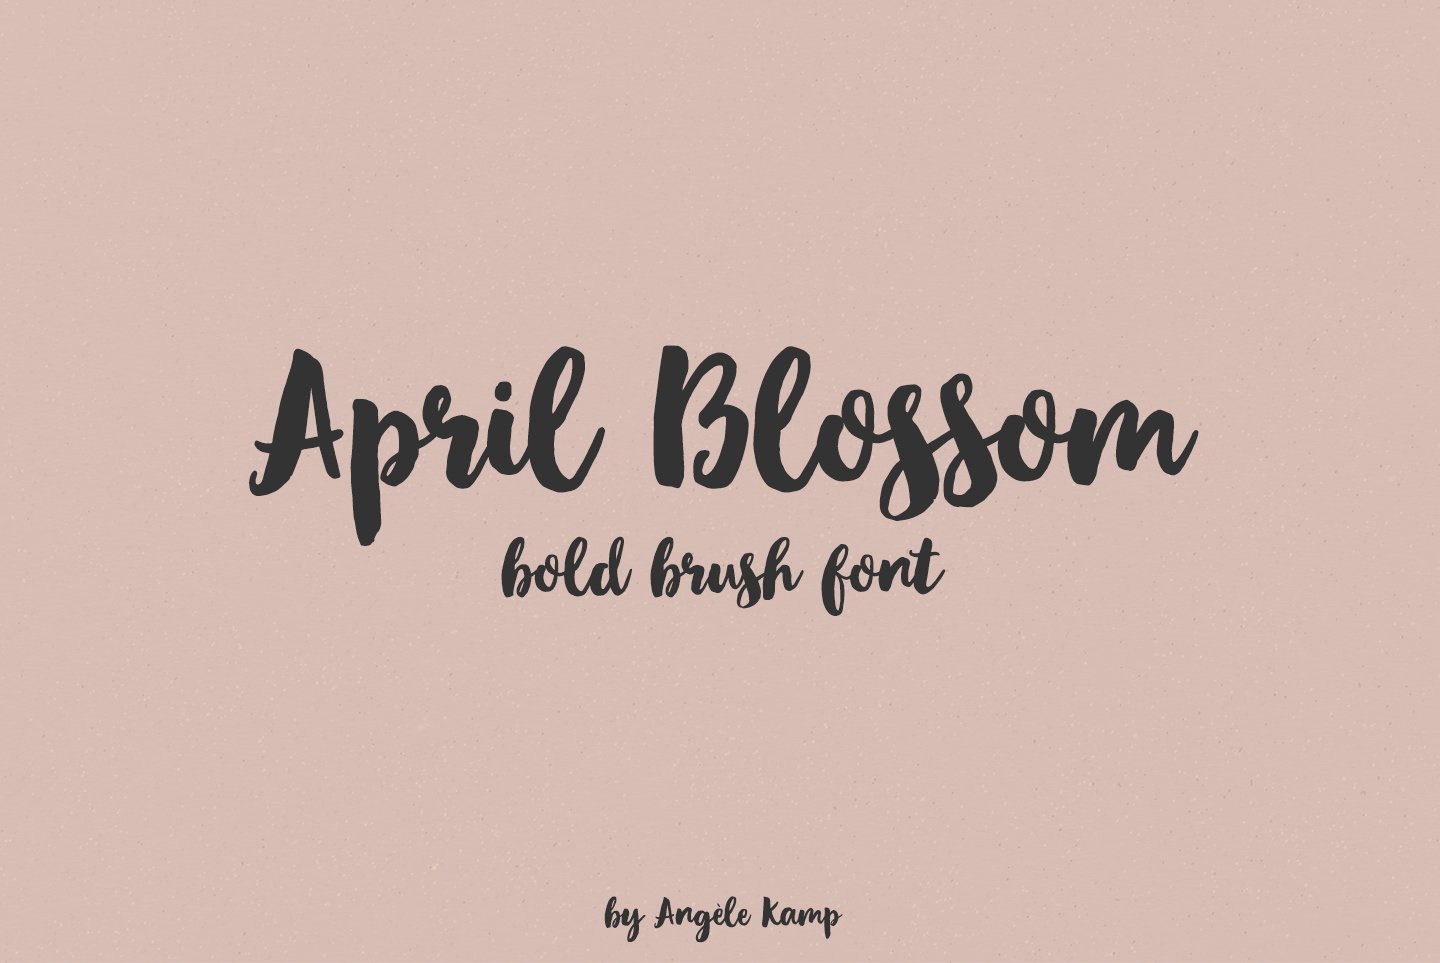 April Blossom bold brush font cover image.